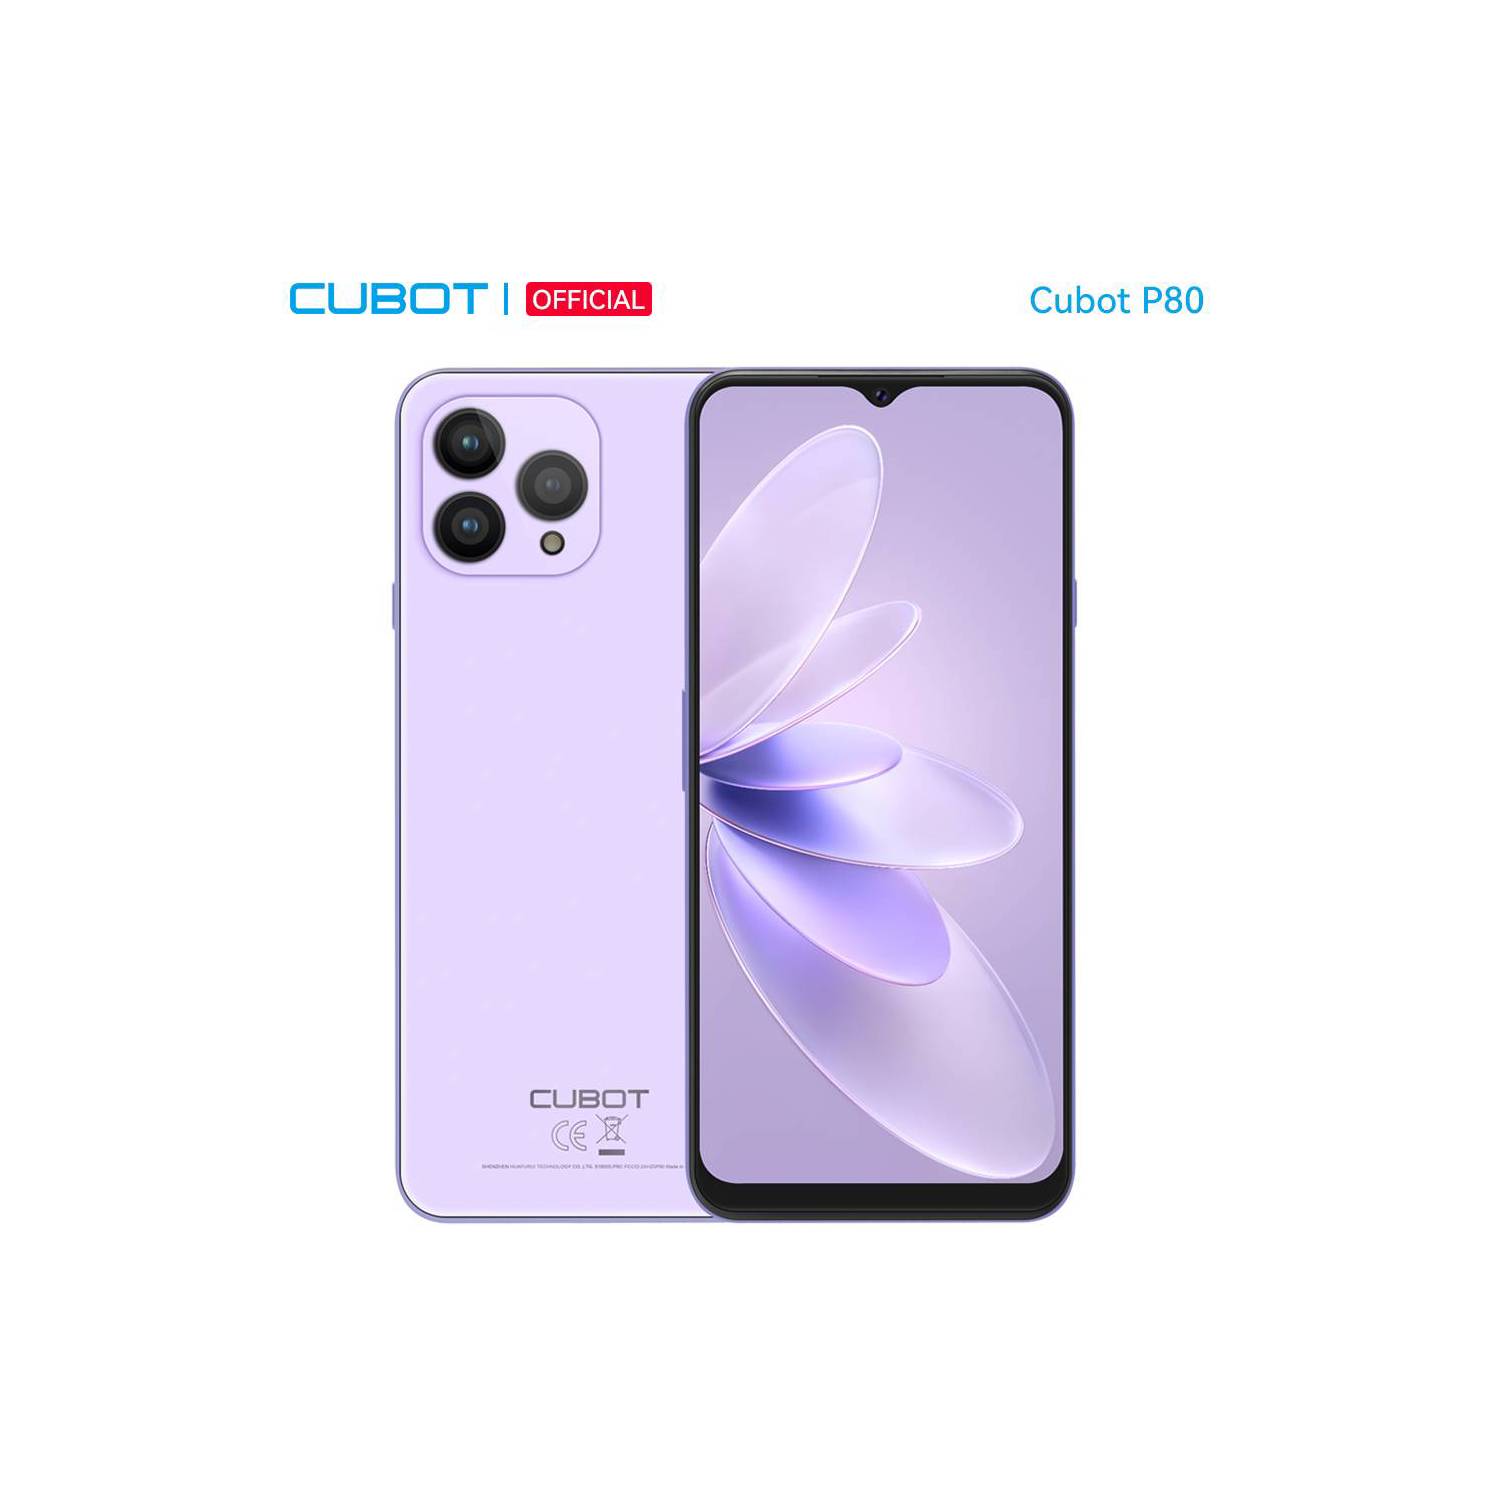 CUBOT Celular Cubot P80 8GB 256G tarjeta SIM dual 5200mAh Android